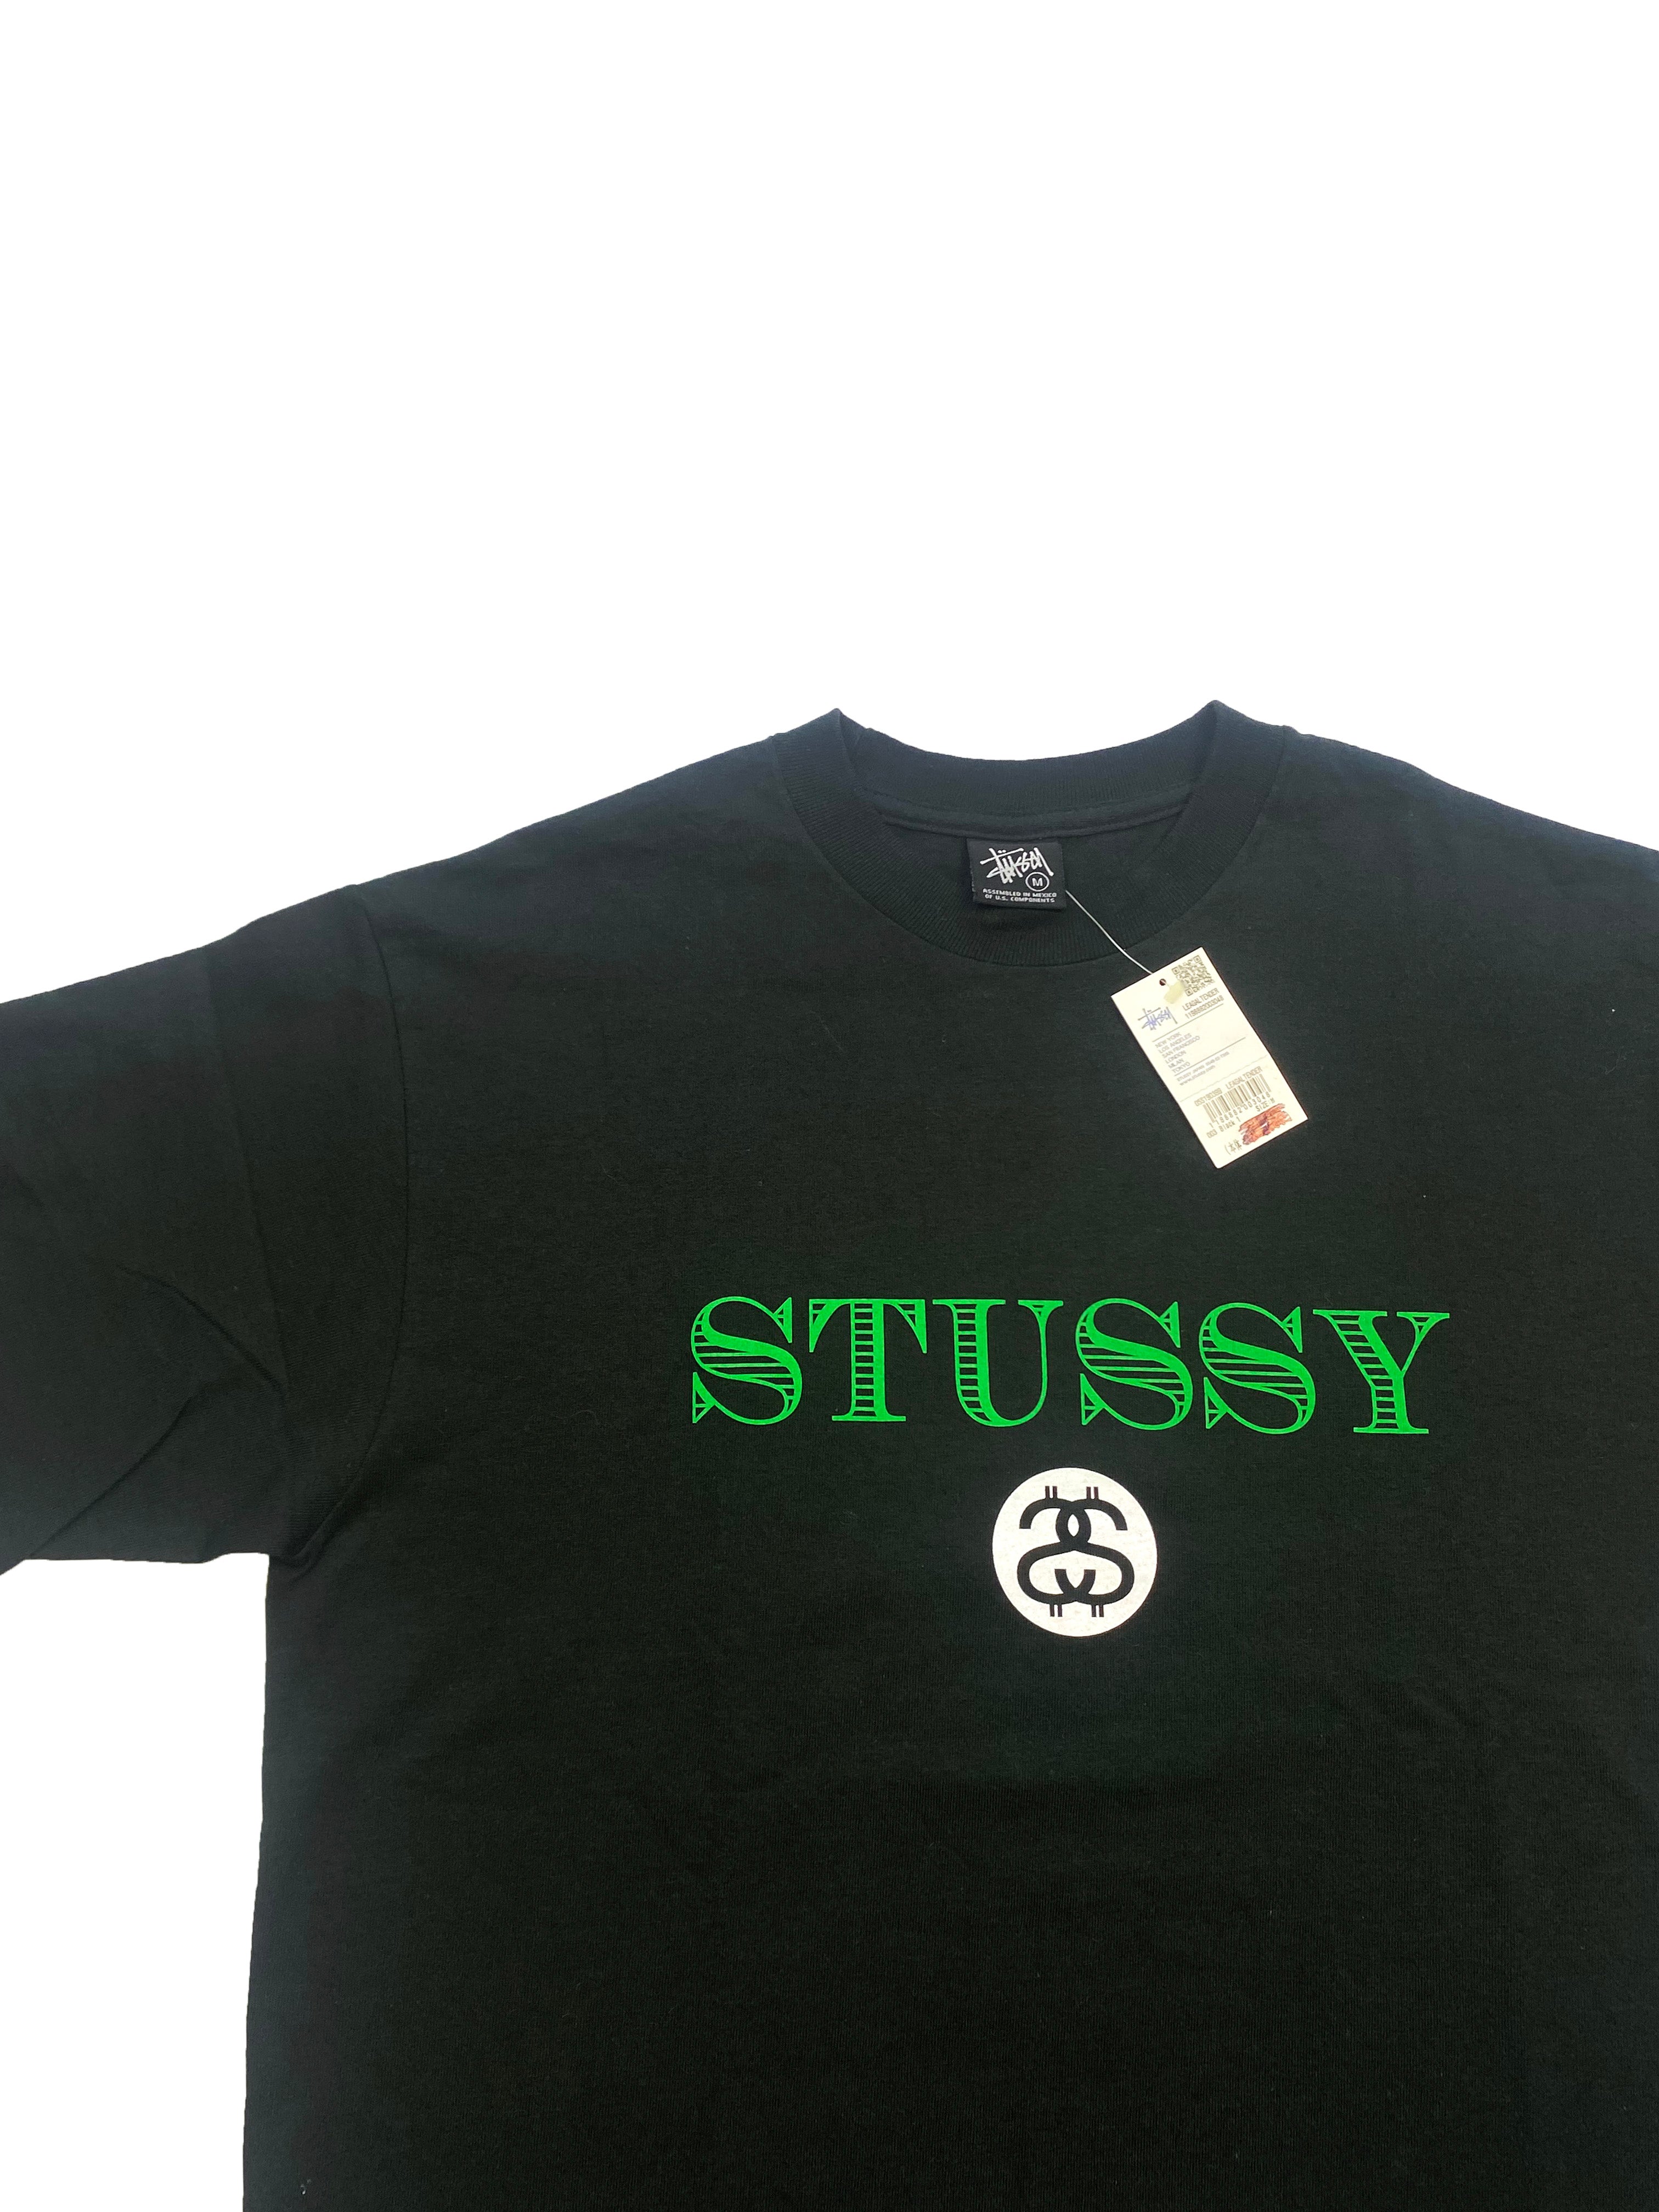 Stussy 'Legal Tender' T-shirt 00's BNWT